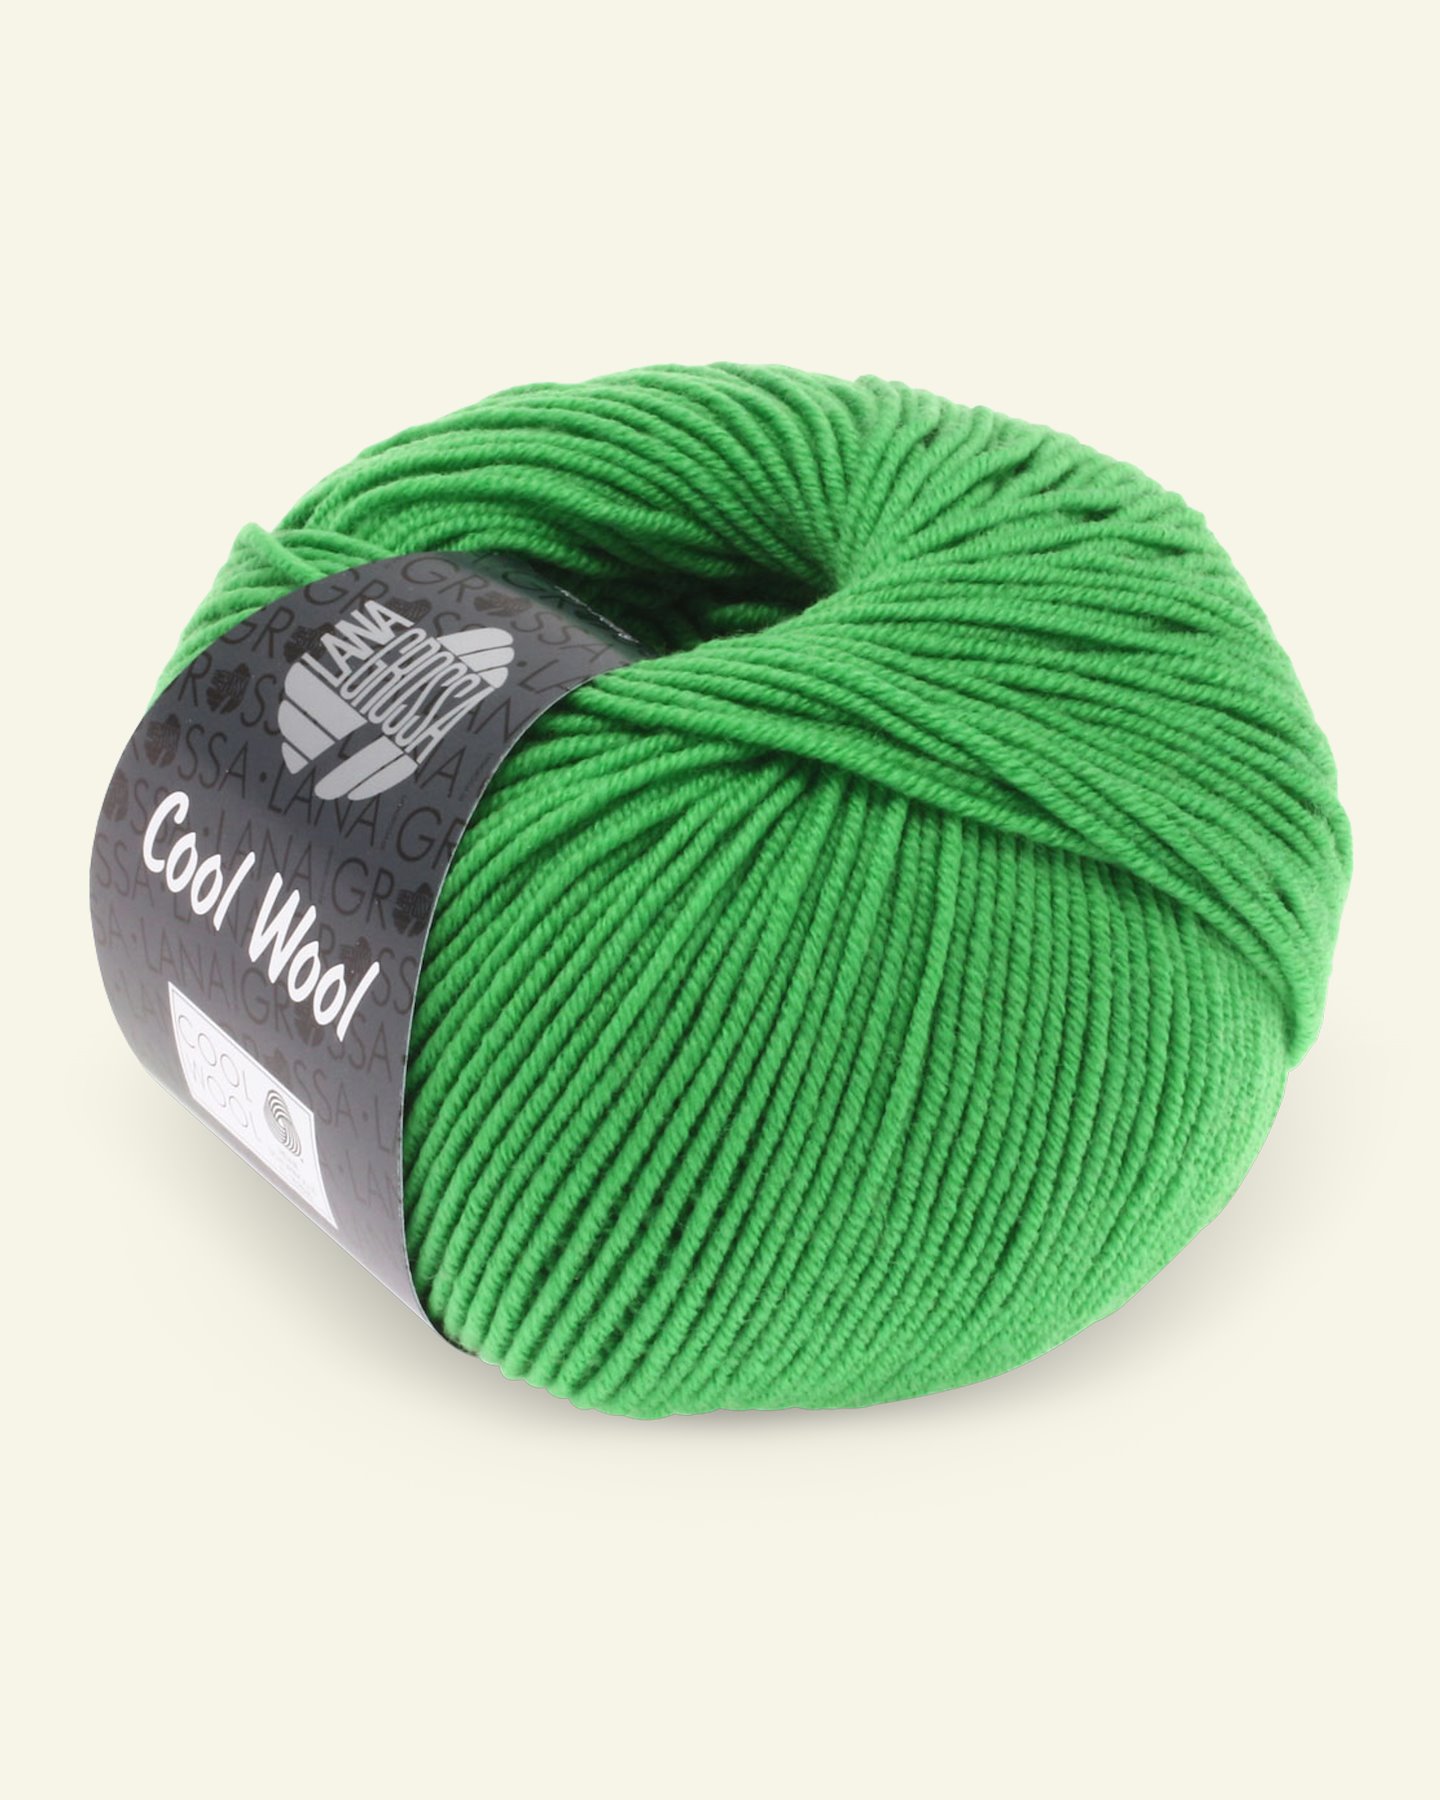 Lana Grossa, extrafine merino wool yarn "Cool Wool", bright green 90001128_pack